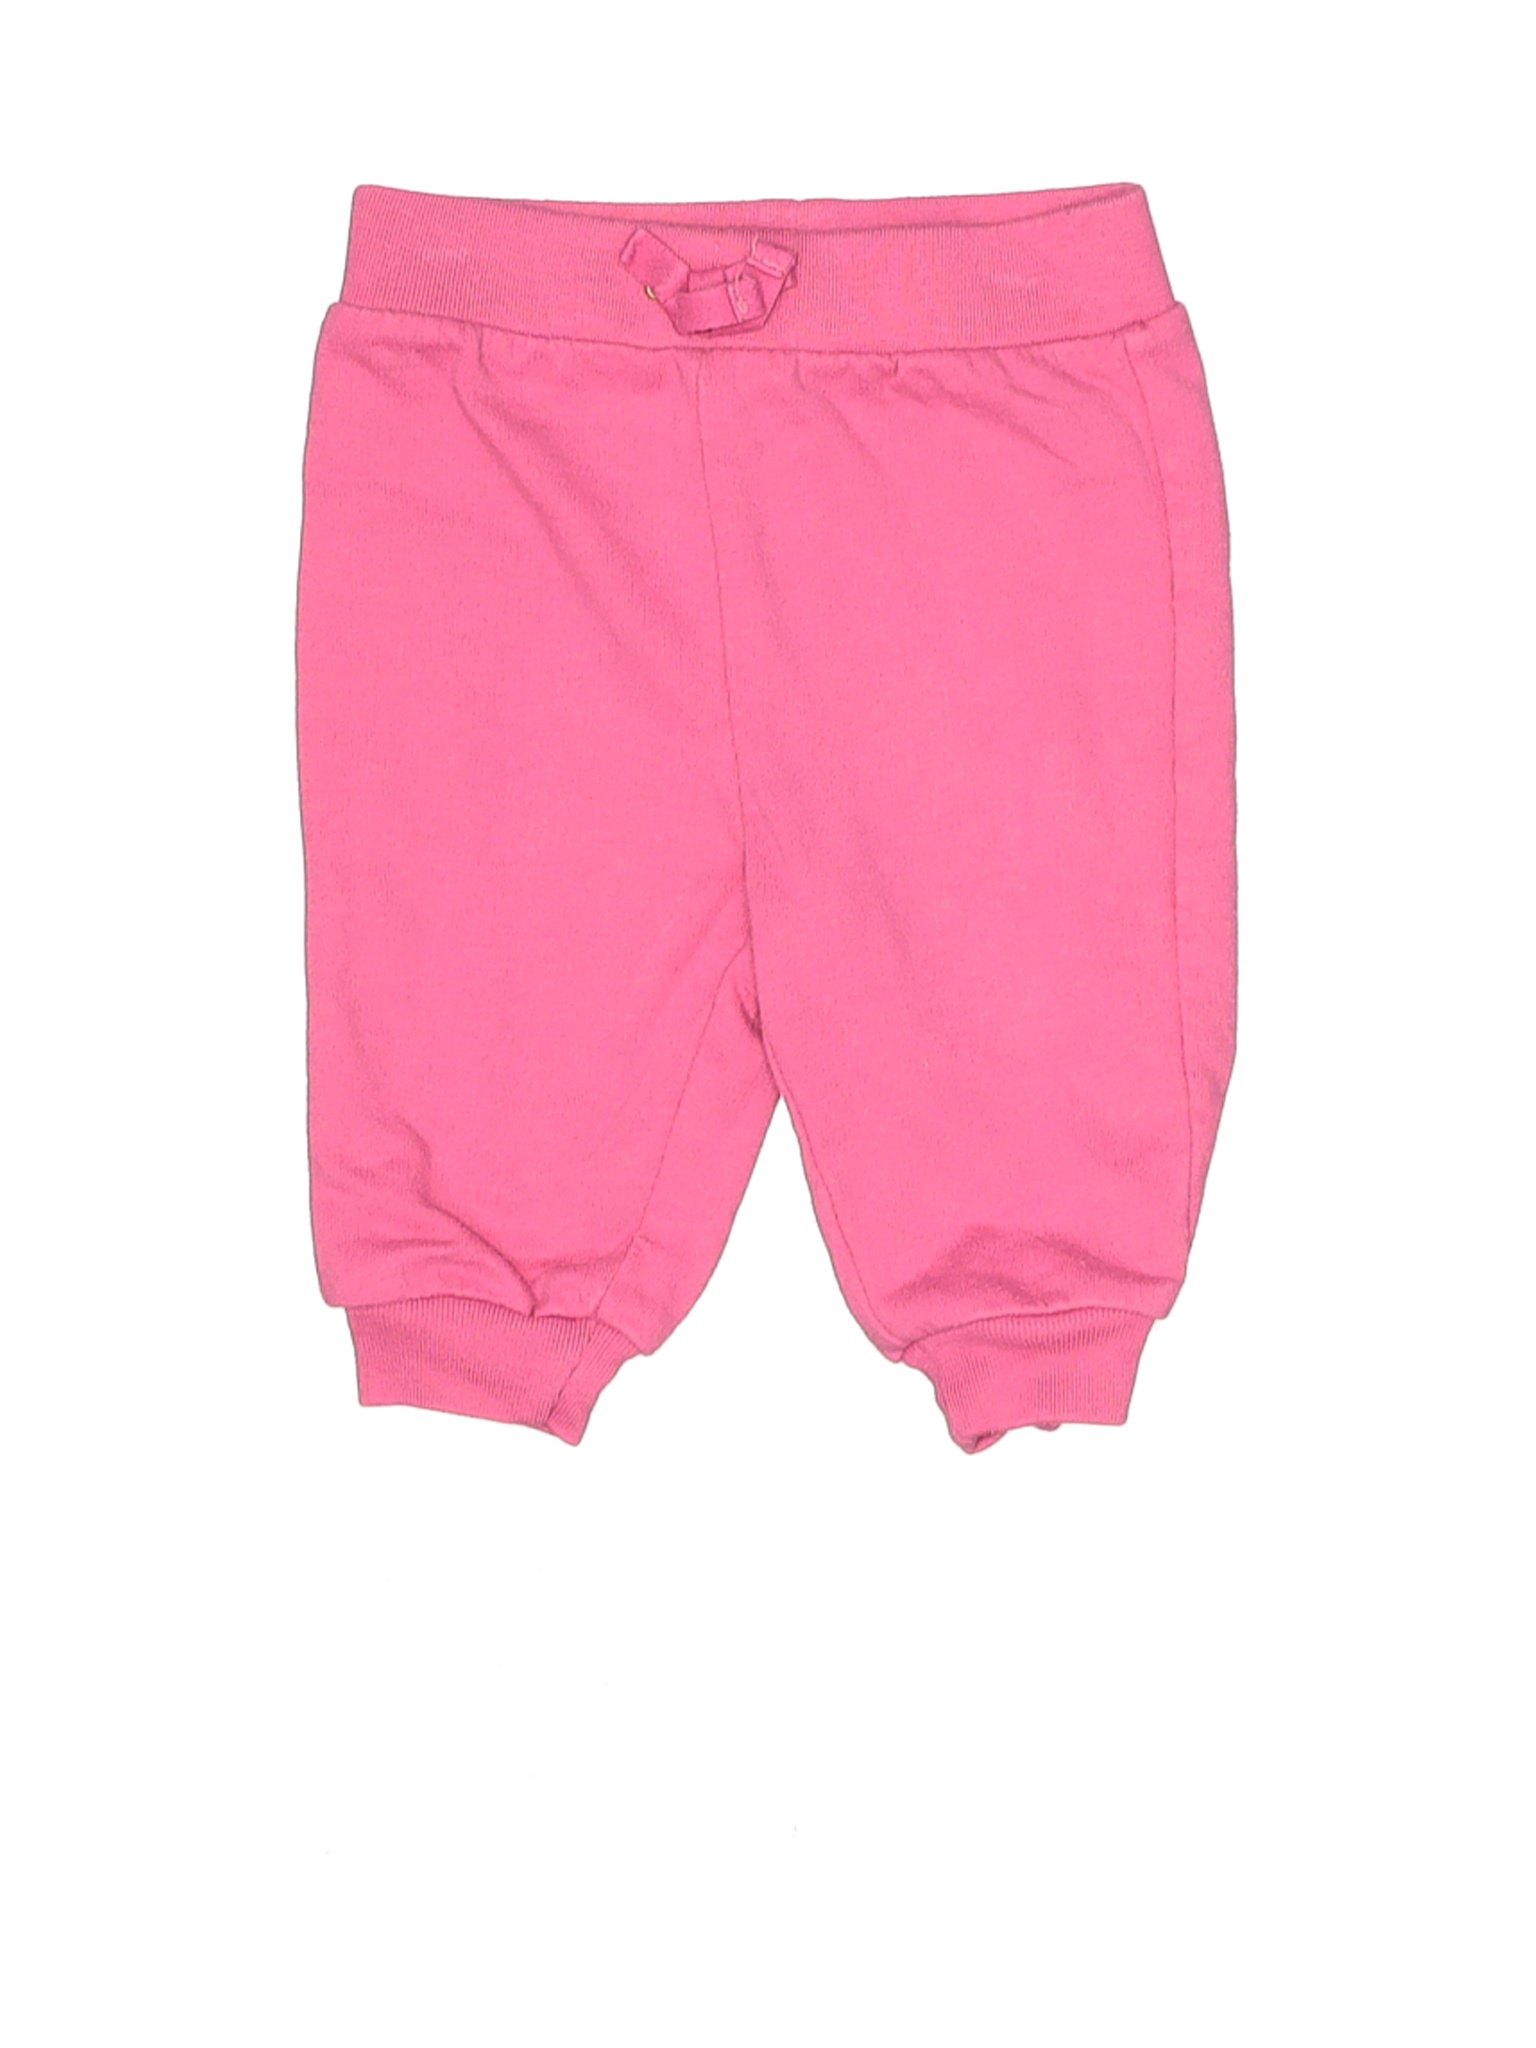 Ralph Lauren Girls Pink Sweatpants 3-6 Months | eBay